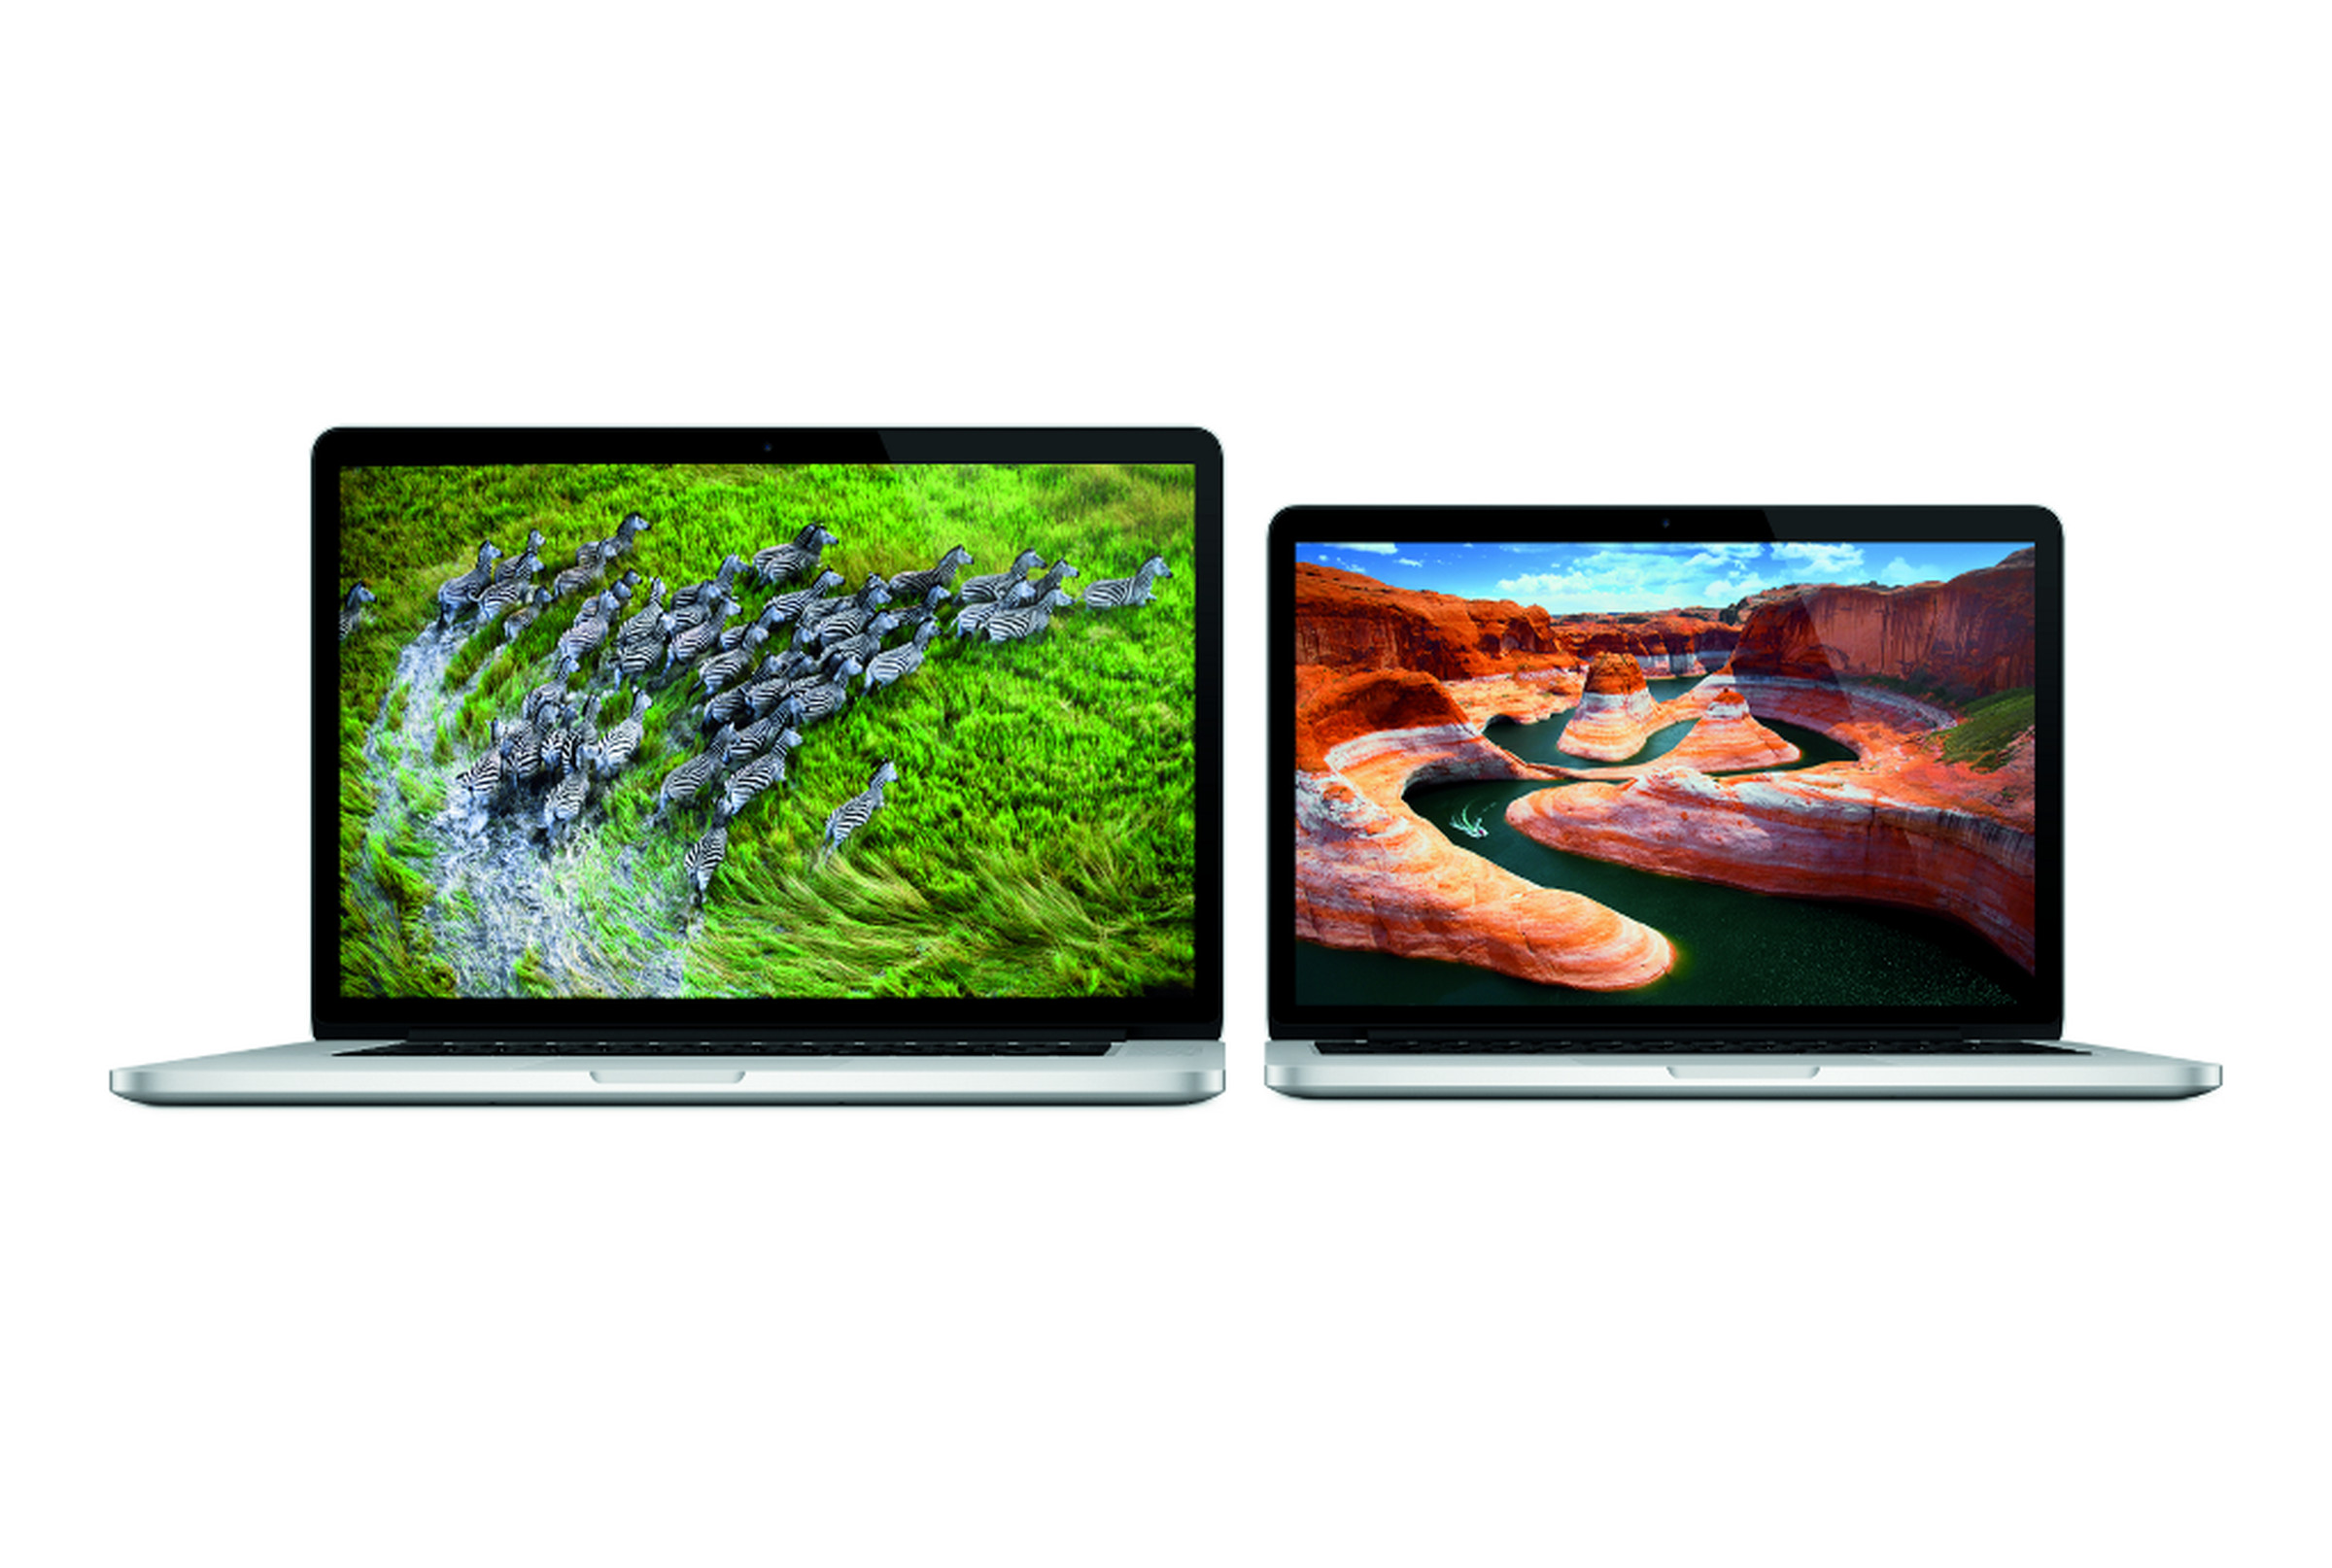 Apple's new 13-inch MacBook Pro with Retina display press images